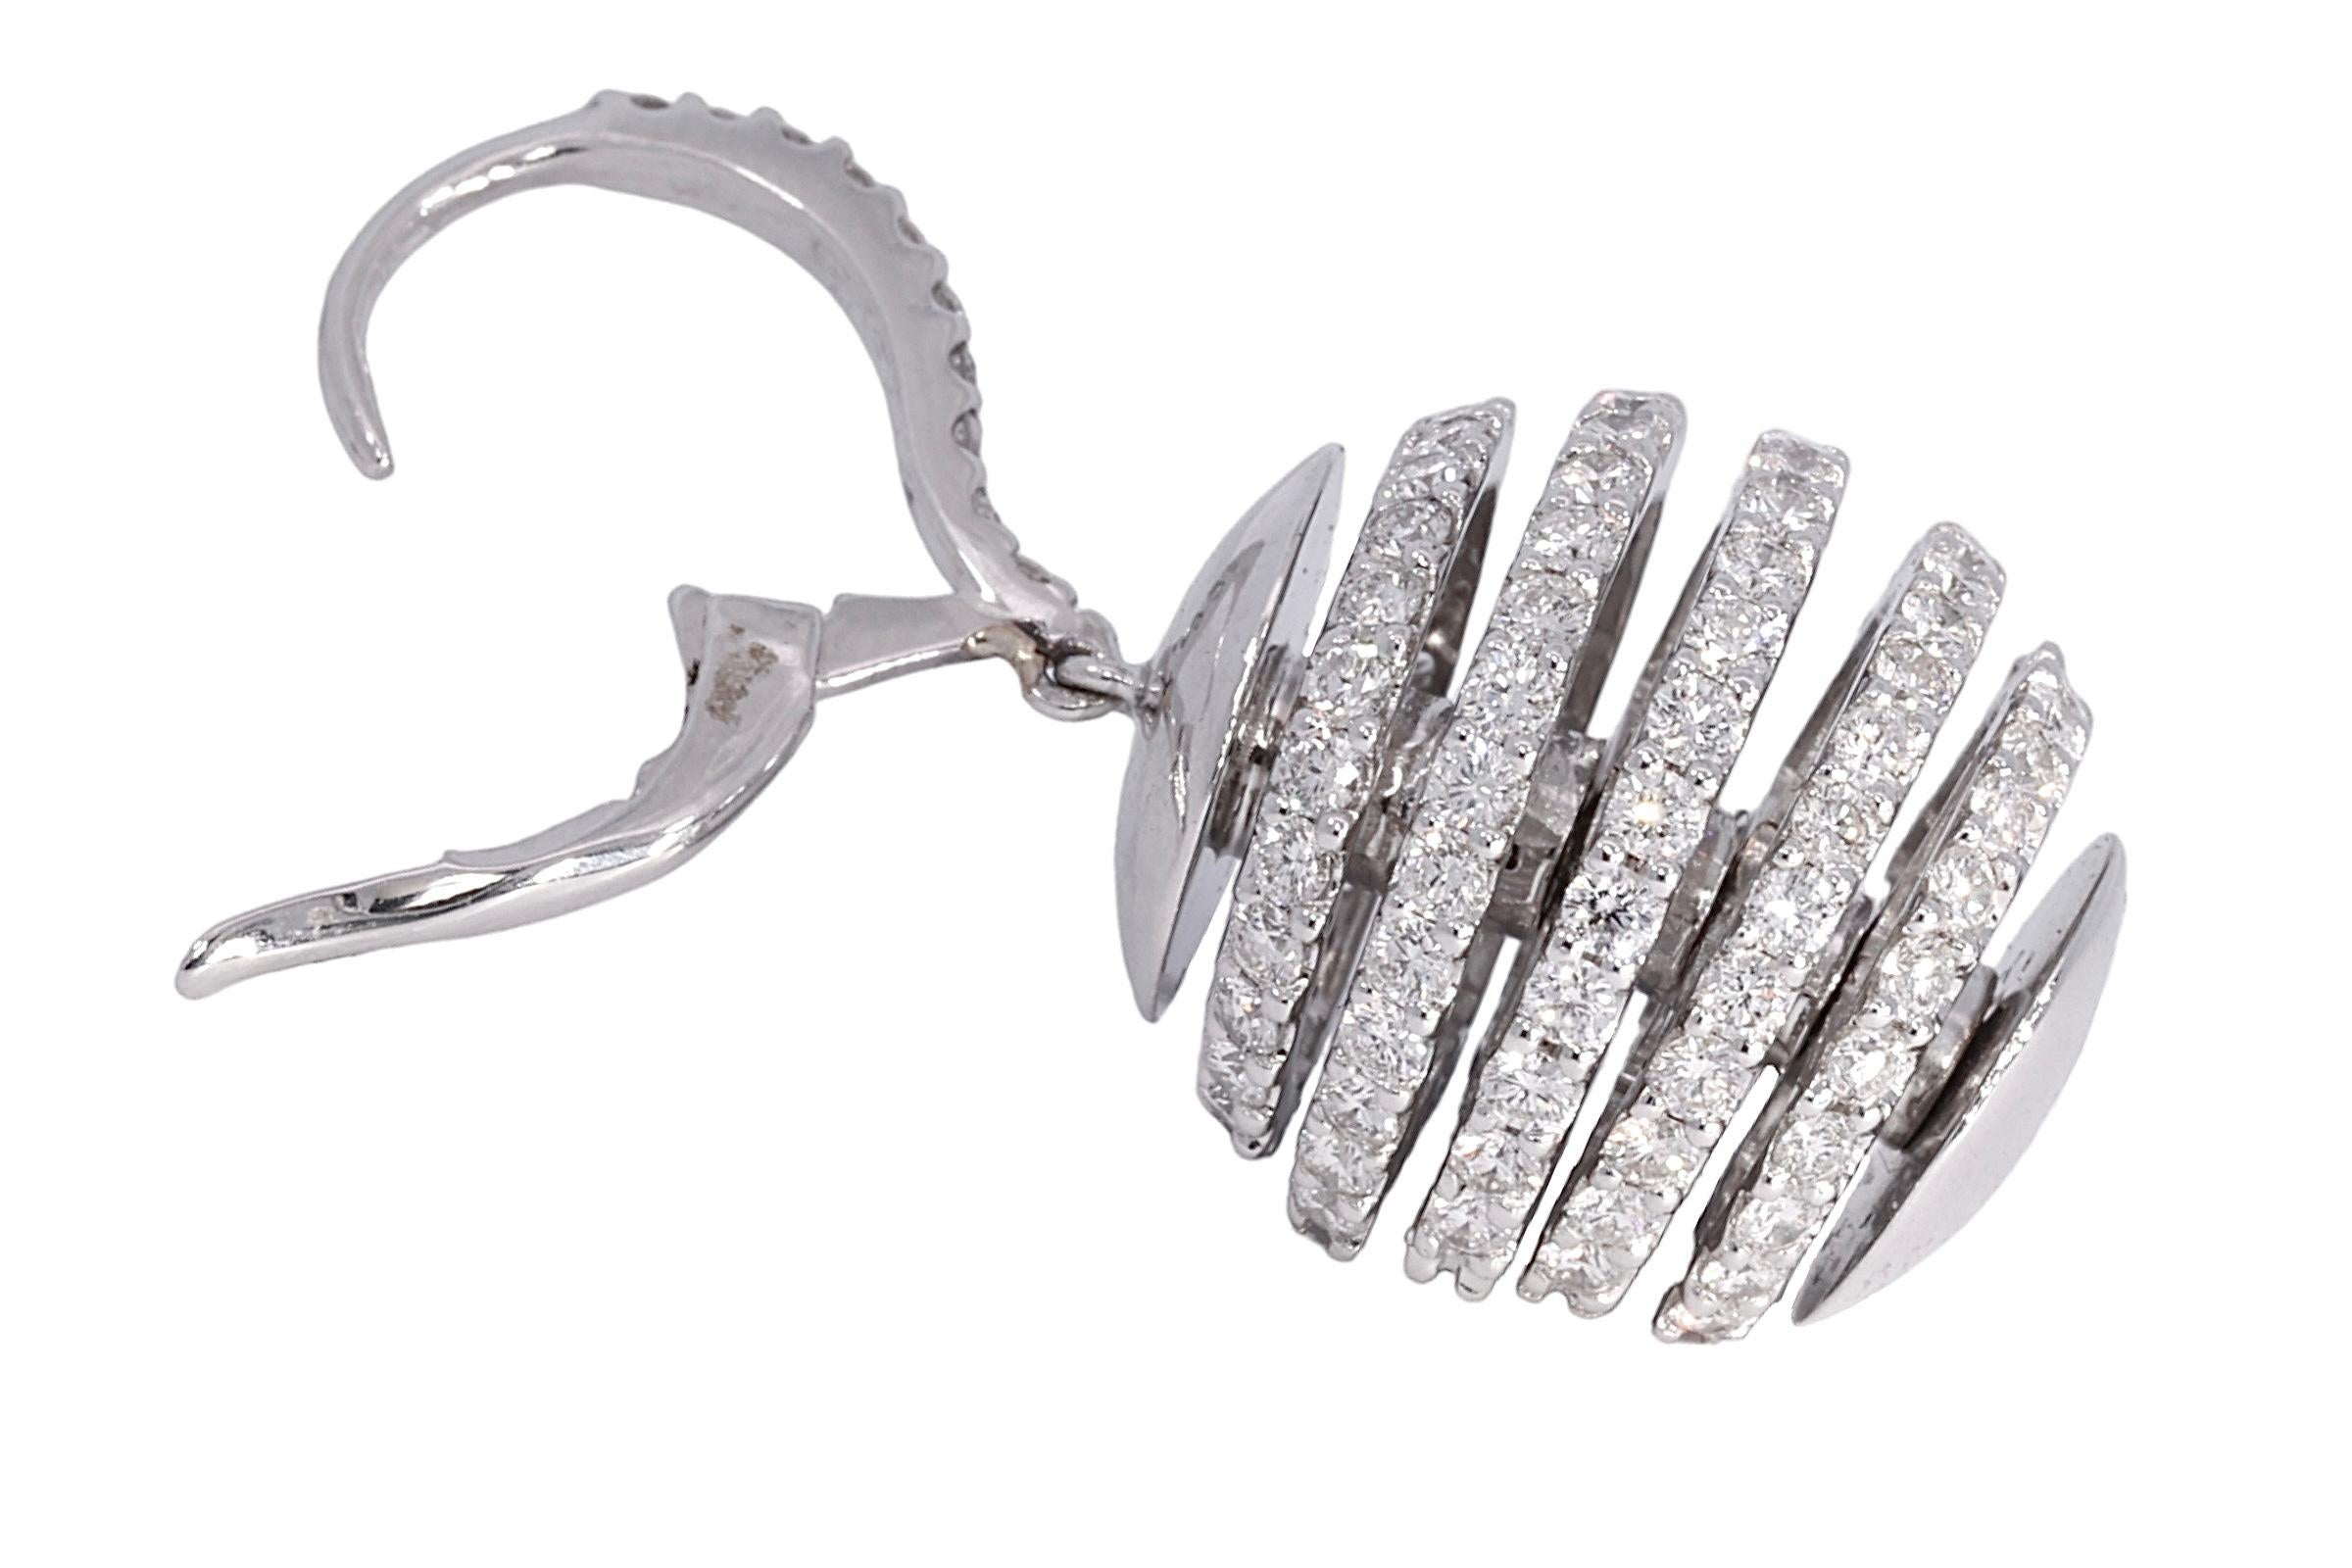 18 Karat White Gold Earrings with 5.4 Carat Brilliant Cut Diamonds For Sale 1